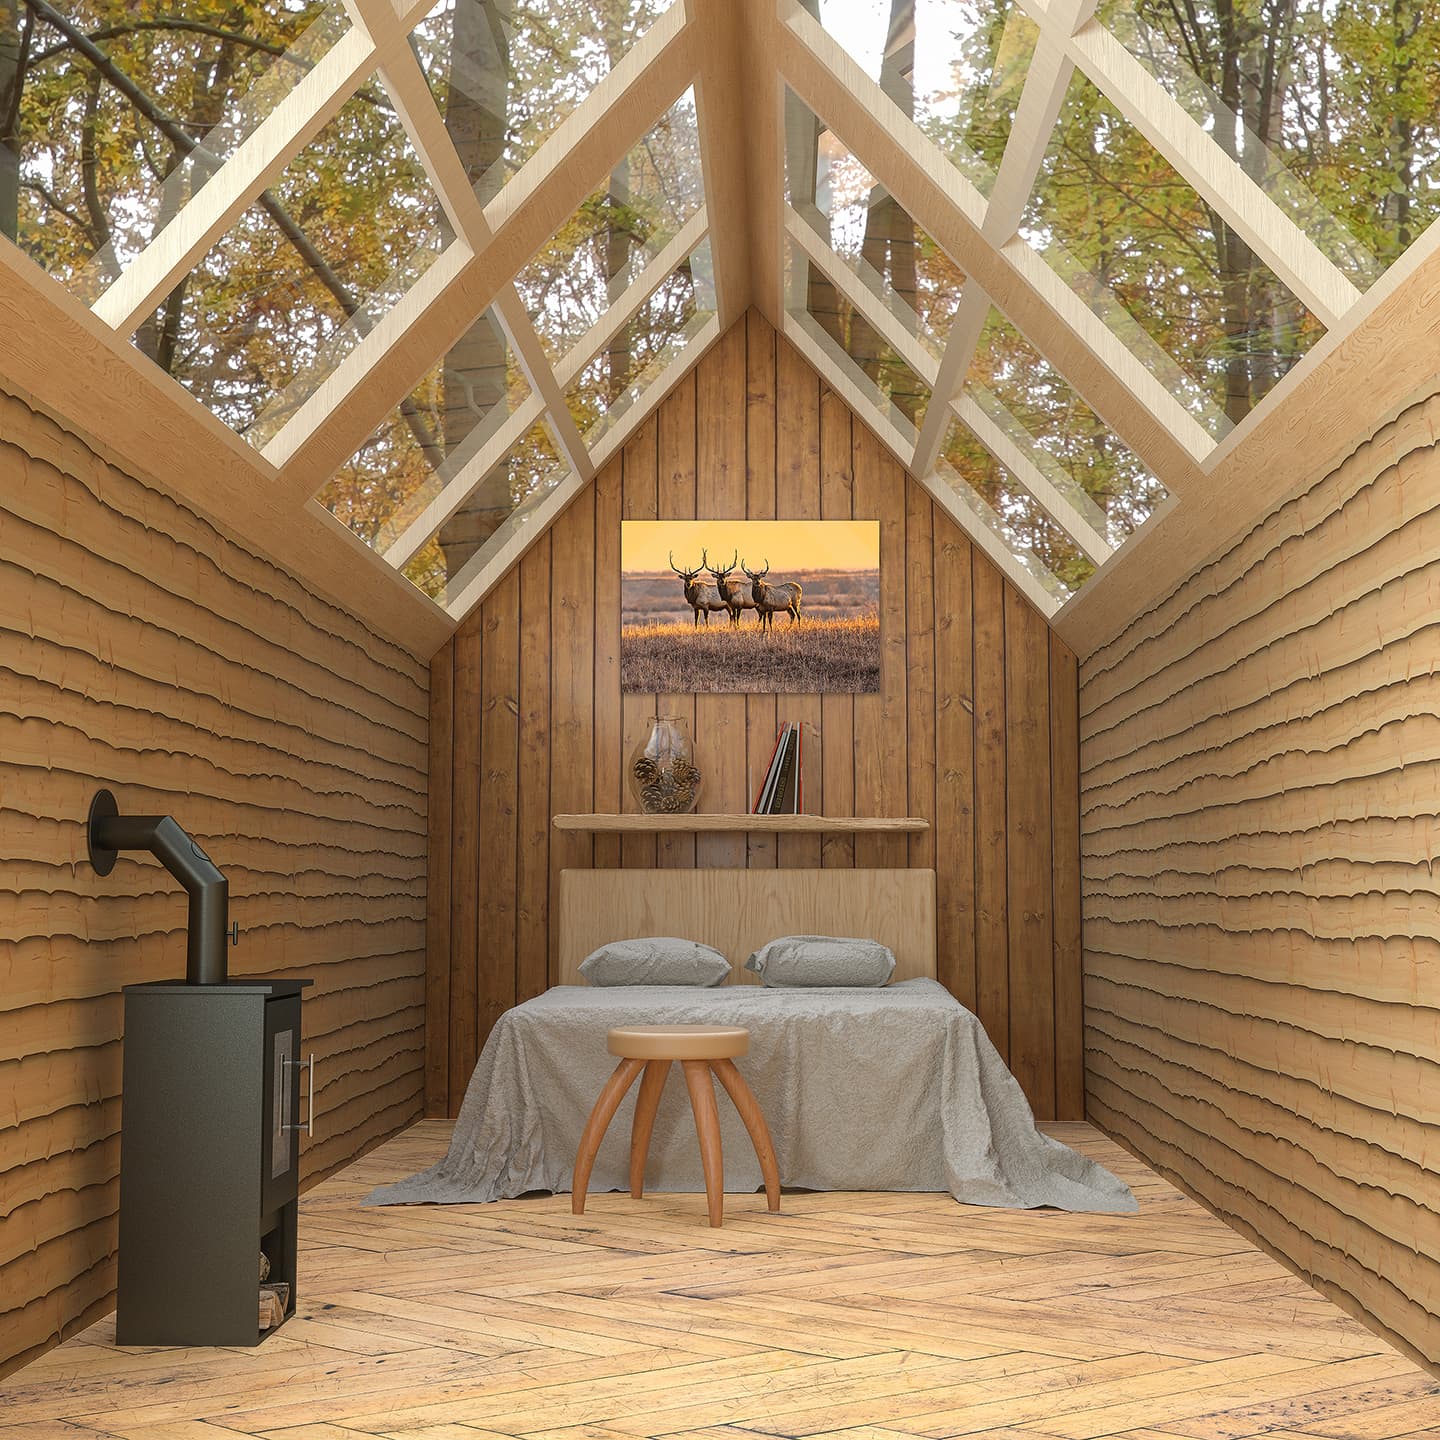 Country Rustic Cabin Interior Design